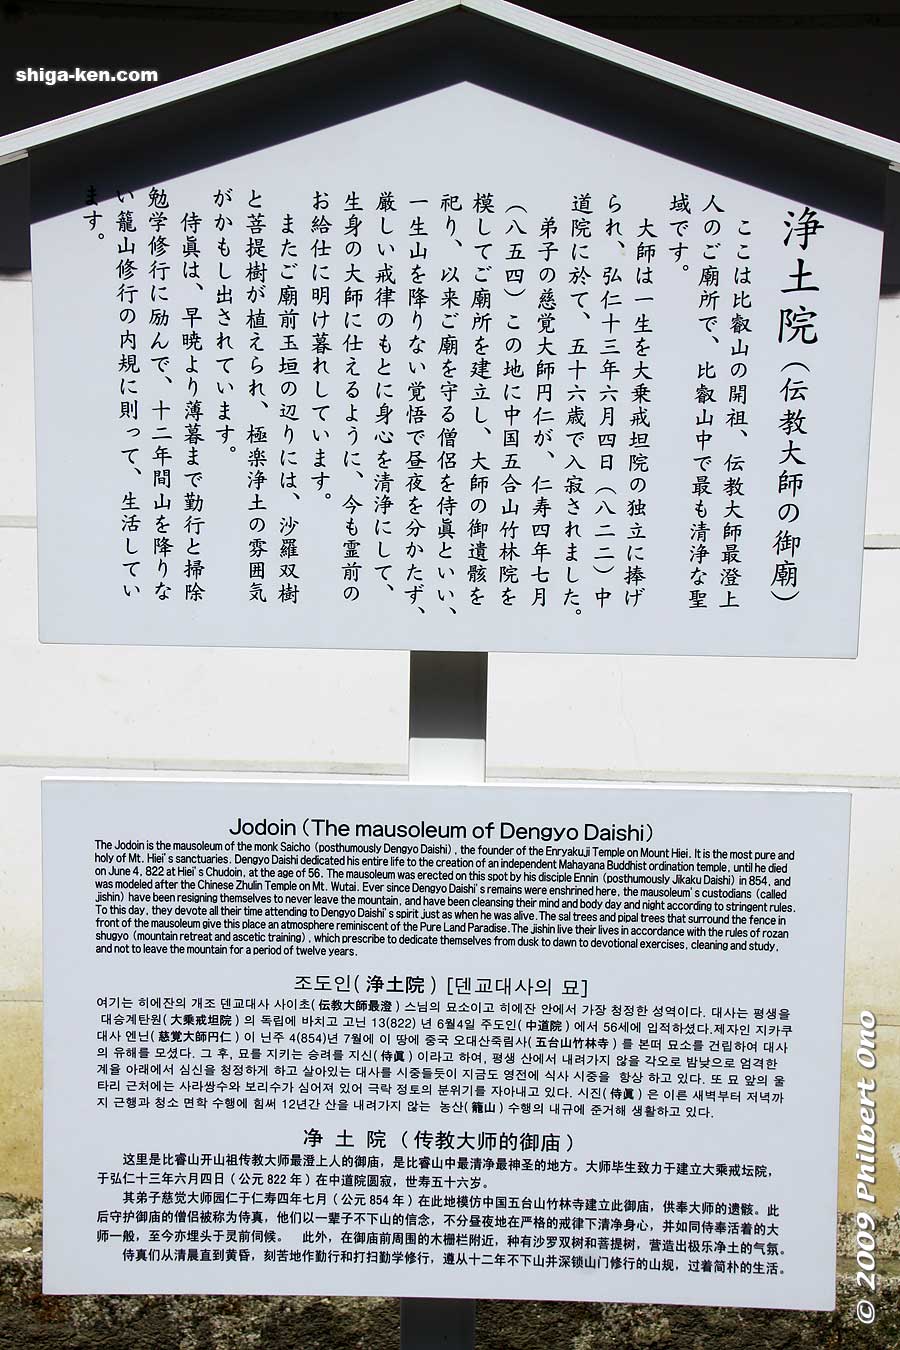 About Jodo-in temple
Keywords: shiga otsu enryakuji buddhist temple tendai 